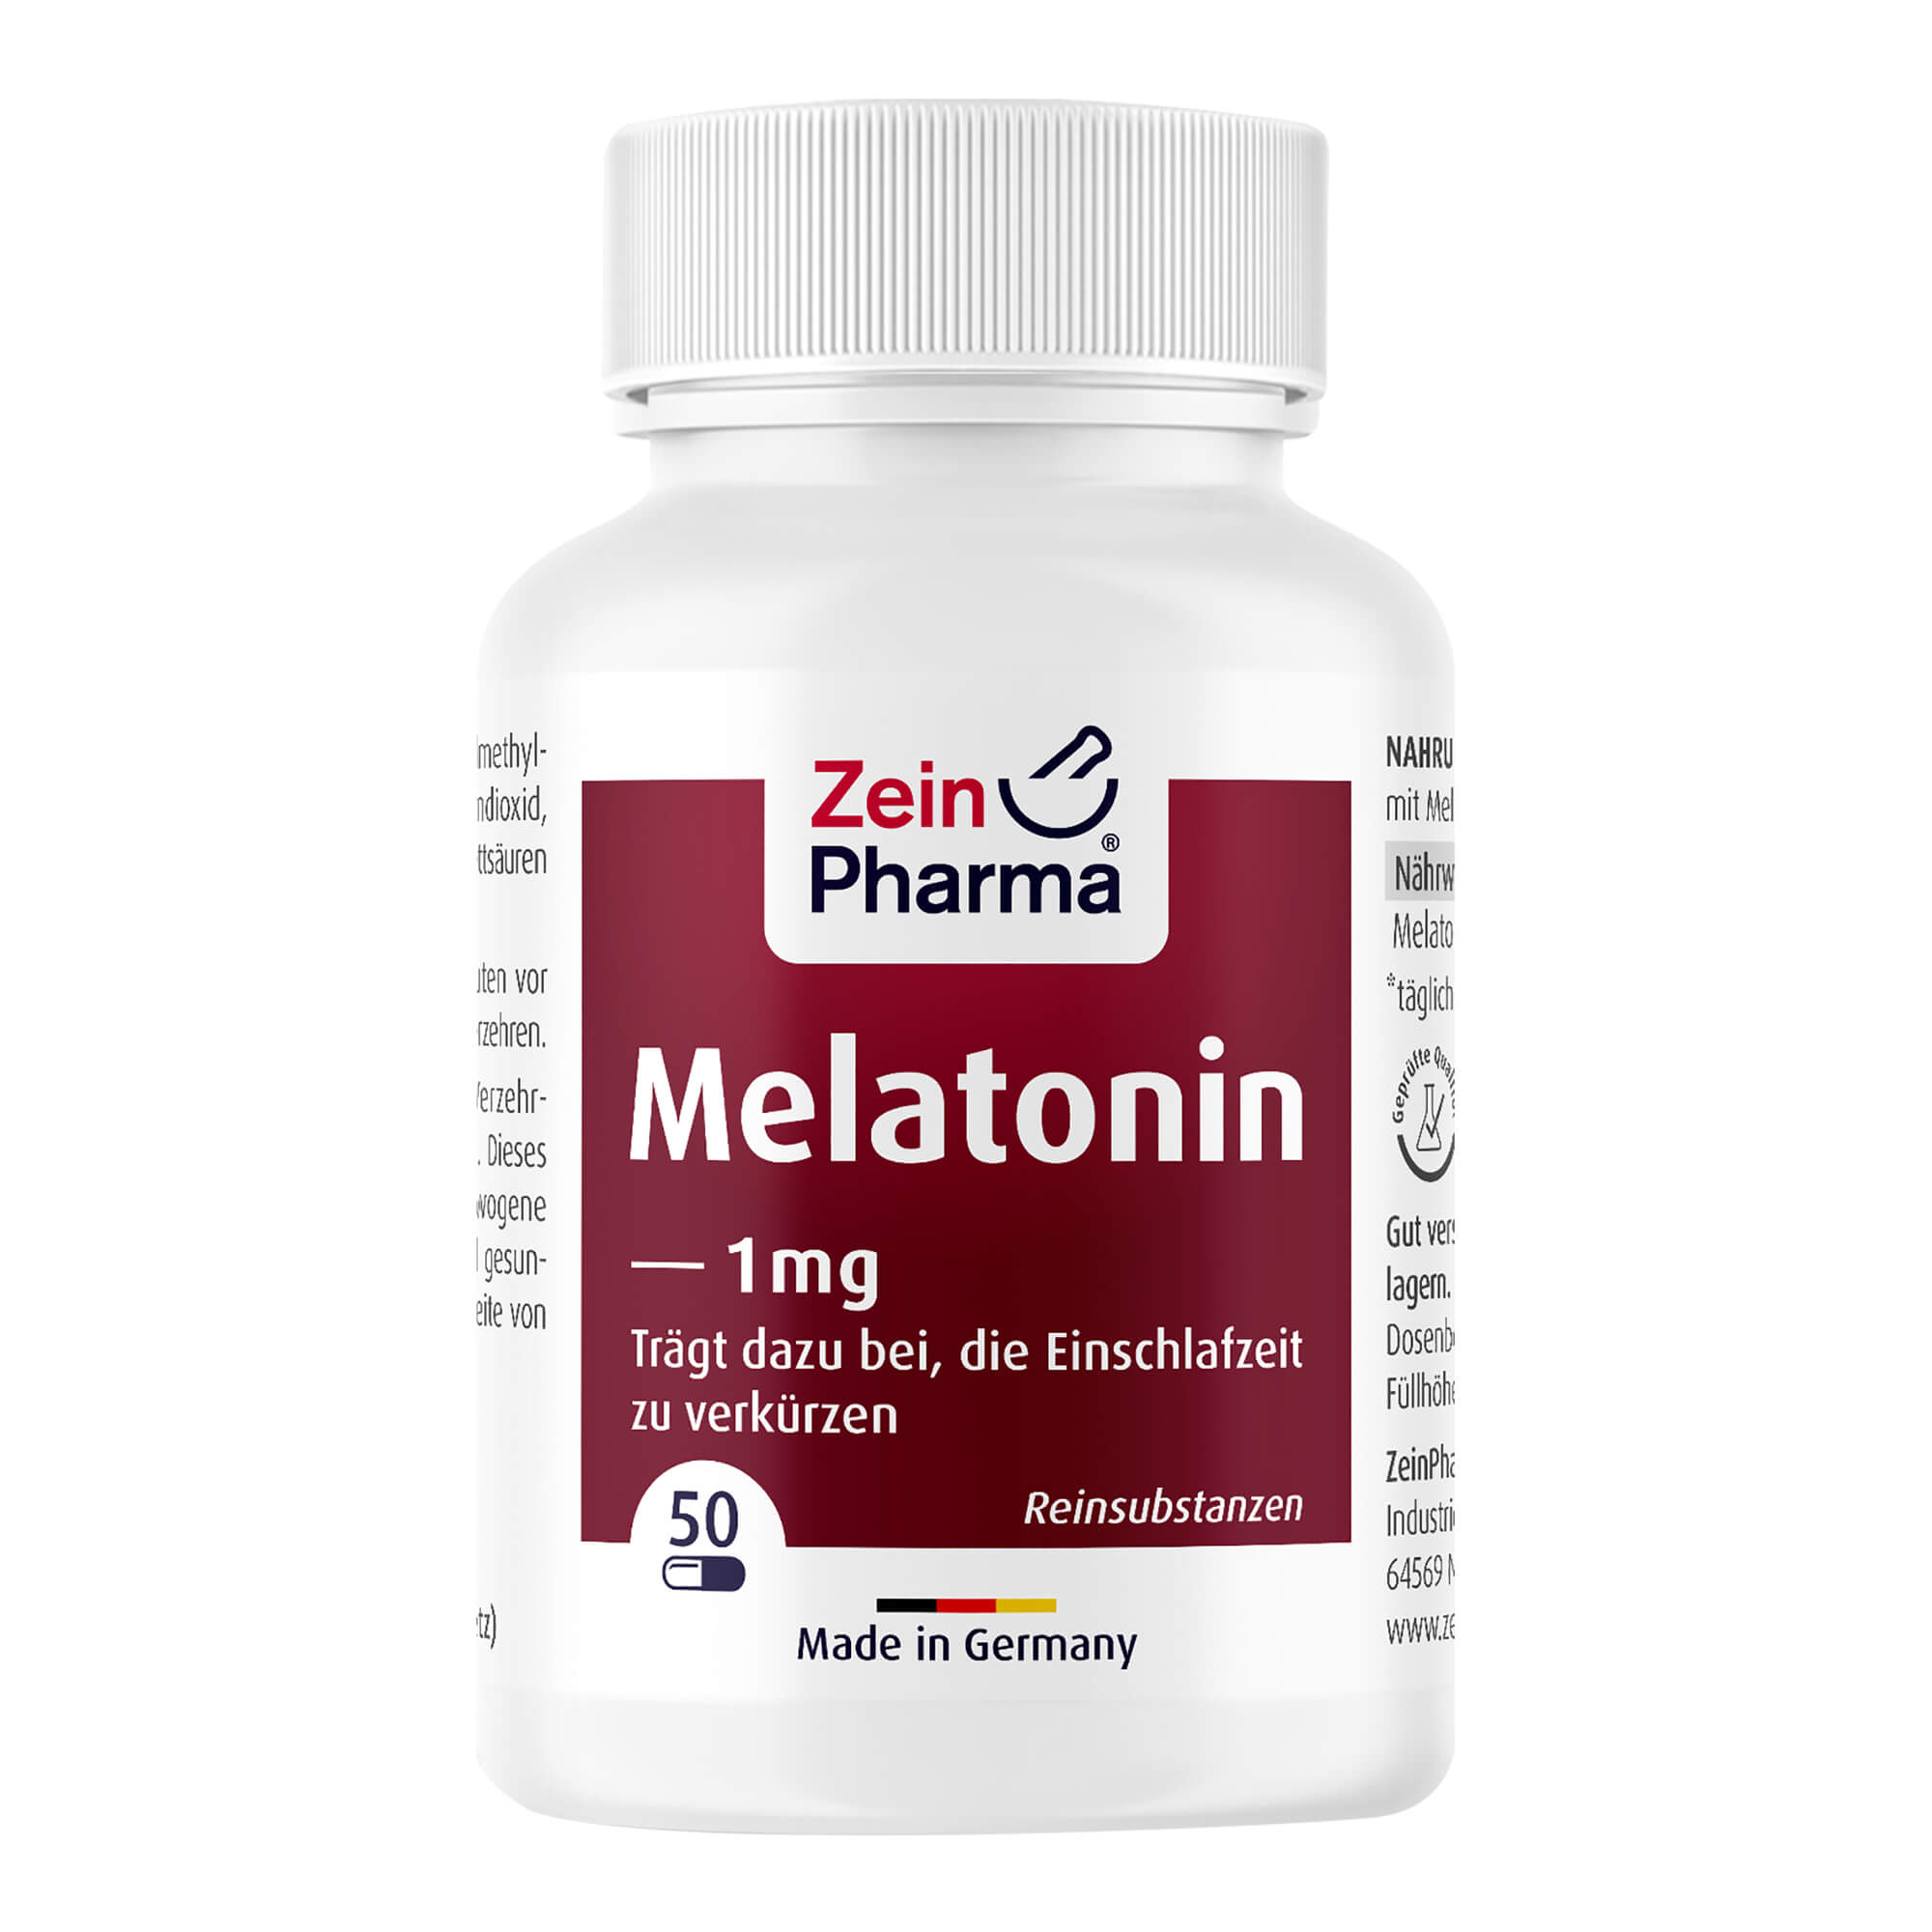 Nahrungsergänzungsmittel mit 1 mg Melatonin. Vegan.